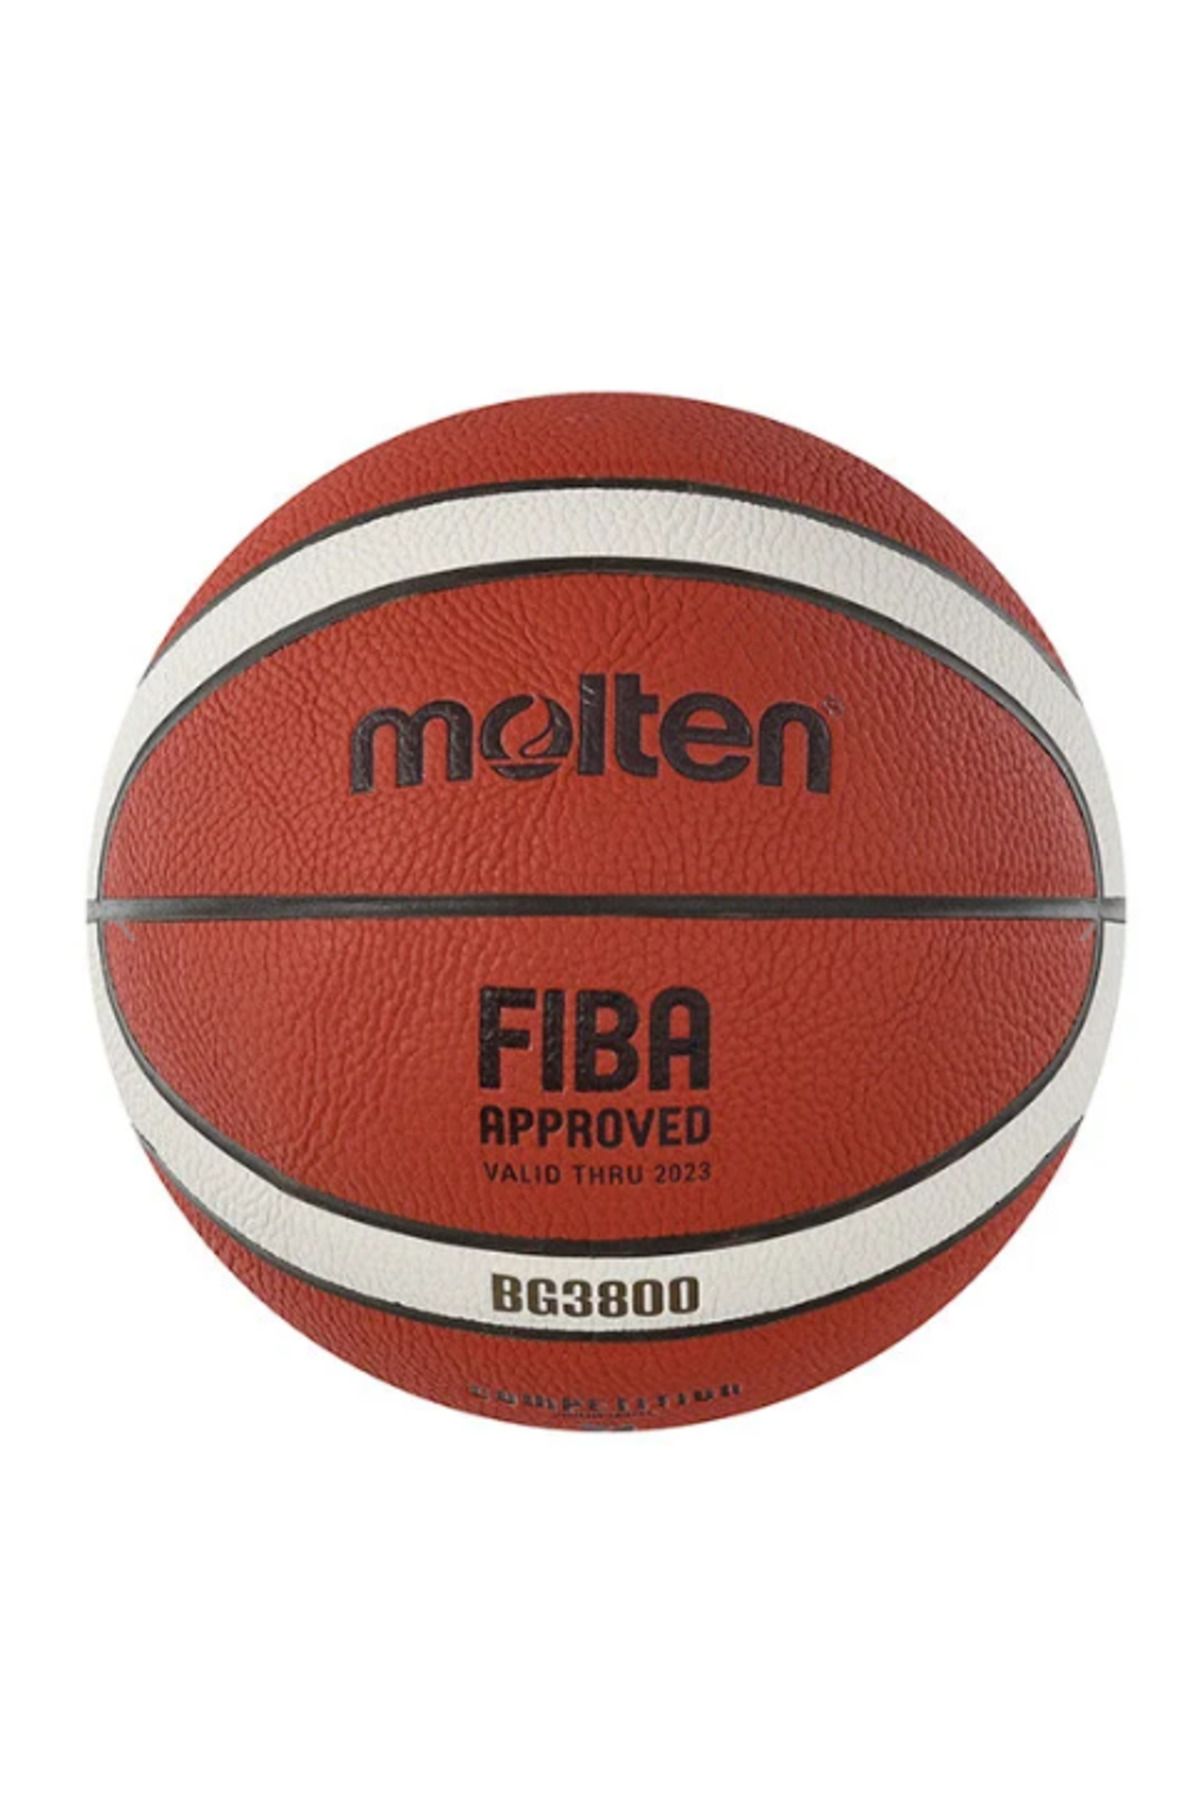 Molten B5g3800 Fıba Onaylı 5 No Basketbol Topu